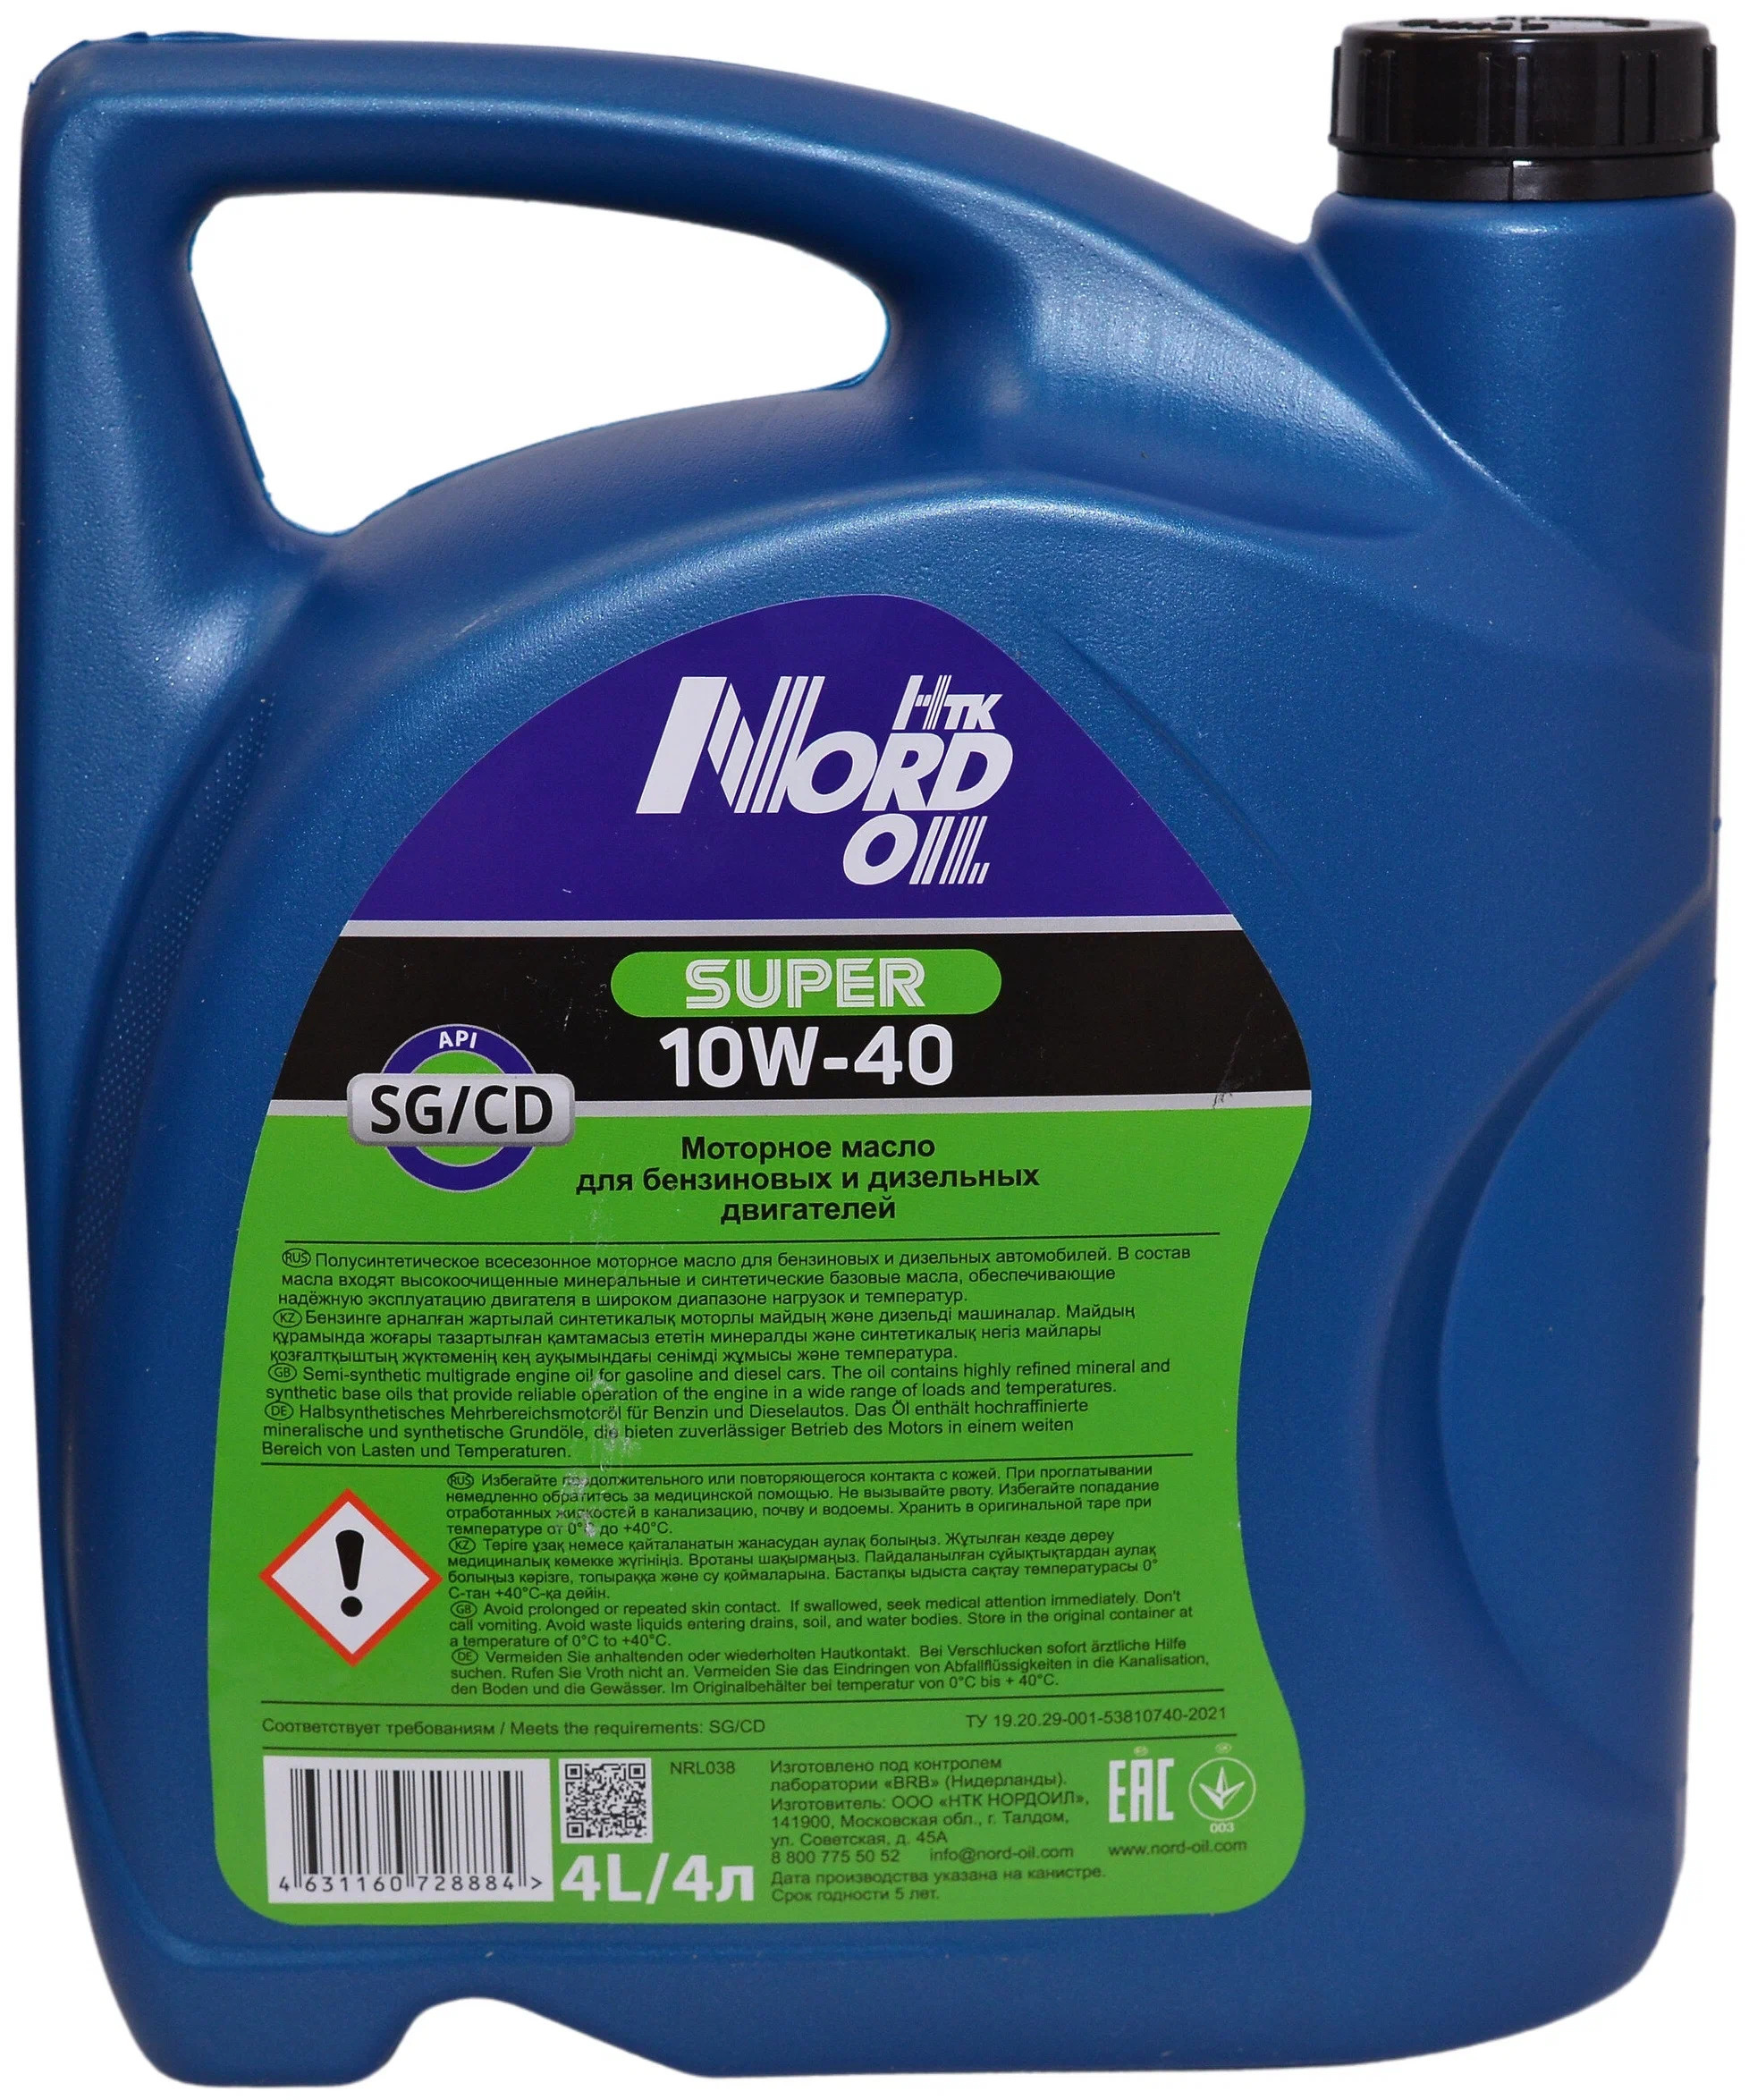 Моторное масло 5 в 10. Nord Oil 10w-40. Масло Nord Oil 10 40. Nord Oil nrl038 масло моторное Nord Oil super 10w-4. Nrl038 Nord Oil масло Nord Oil super 10w-40 SG/CD 4л.